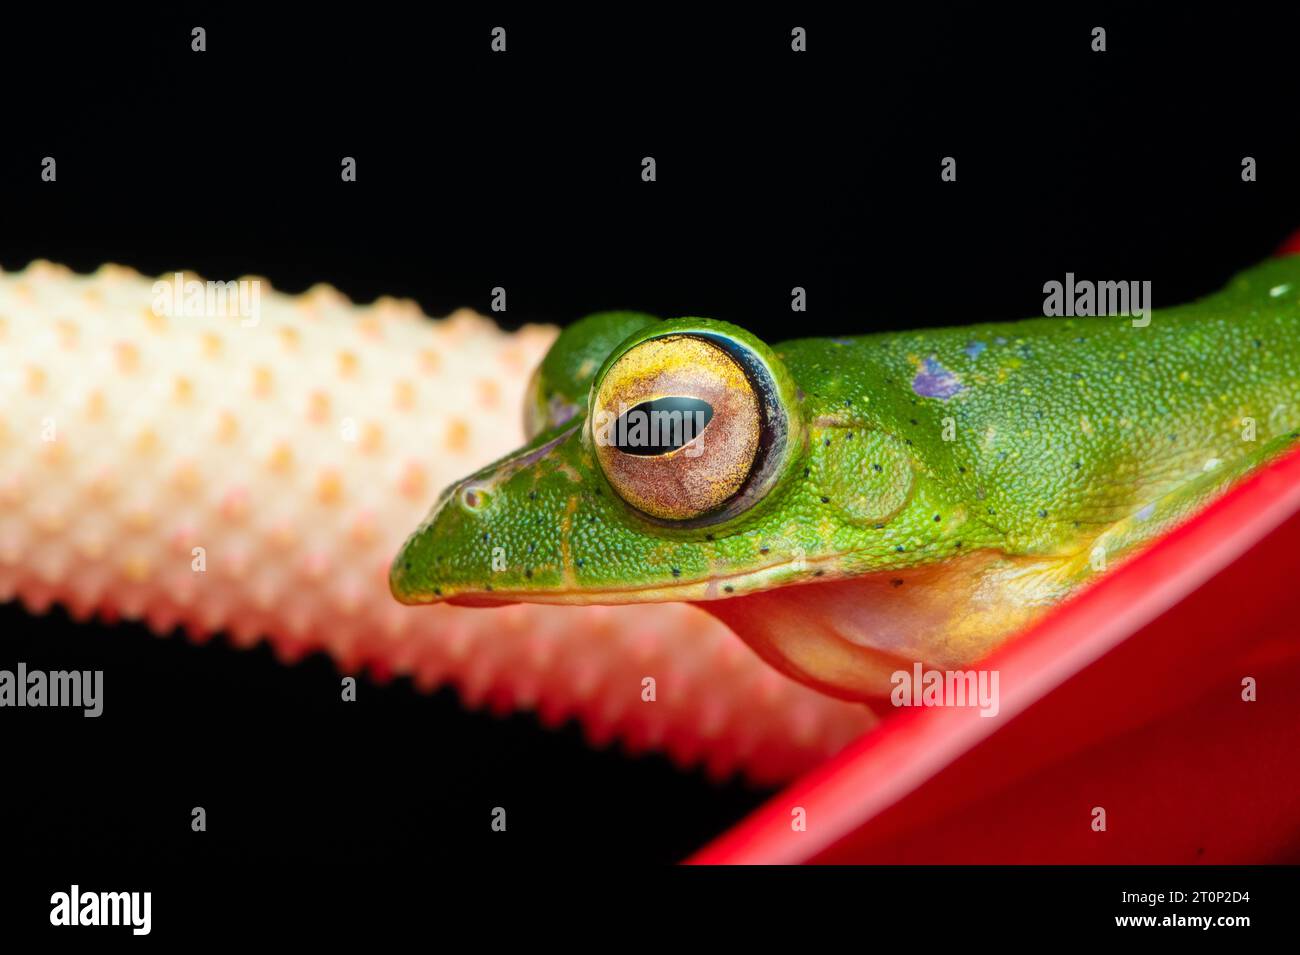 Grenouille planante MALABAR, grenouille volante Malabar Banque D'Images